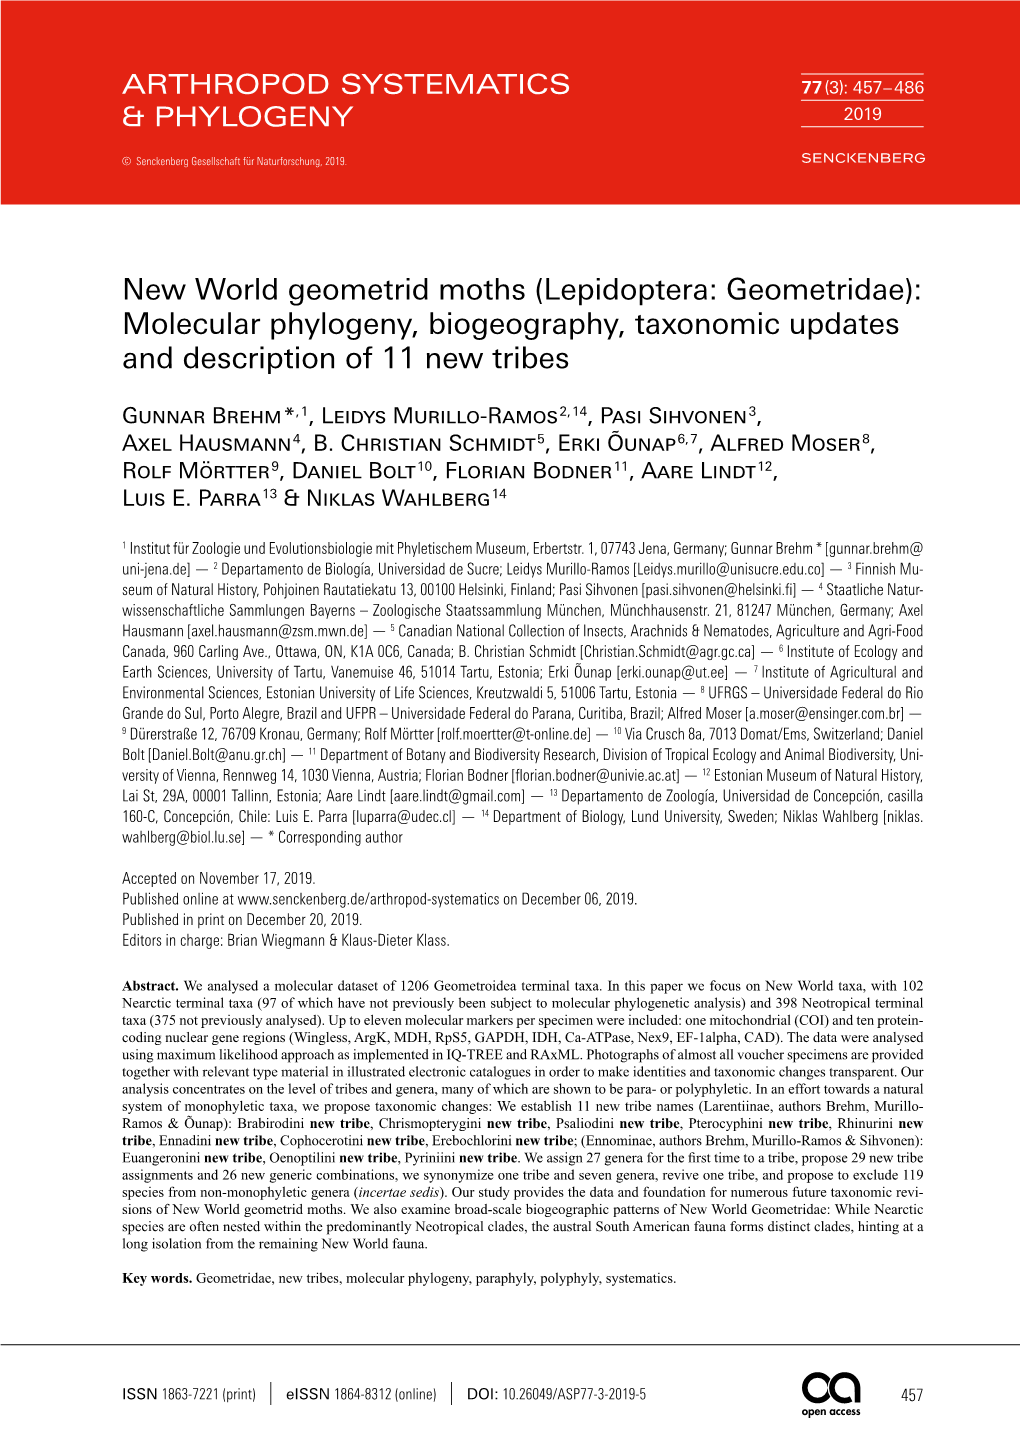 New World Geometrid Moths (Lepidoptera: Geometridae): Molecular Phylogeny, Biogeography, Taxonomic Updates and Description of 11 New Tribes